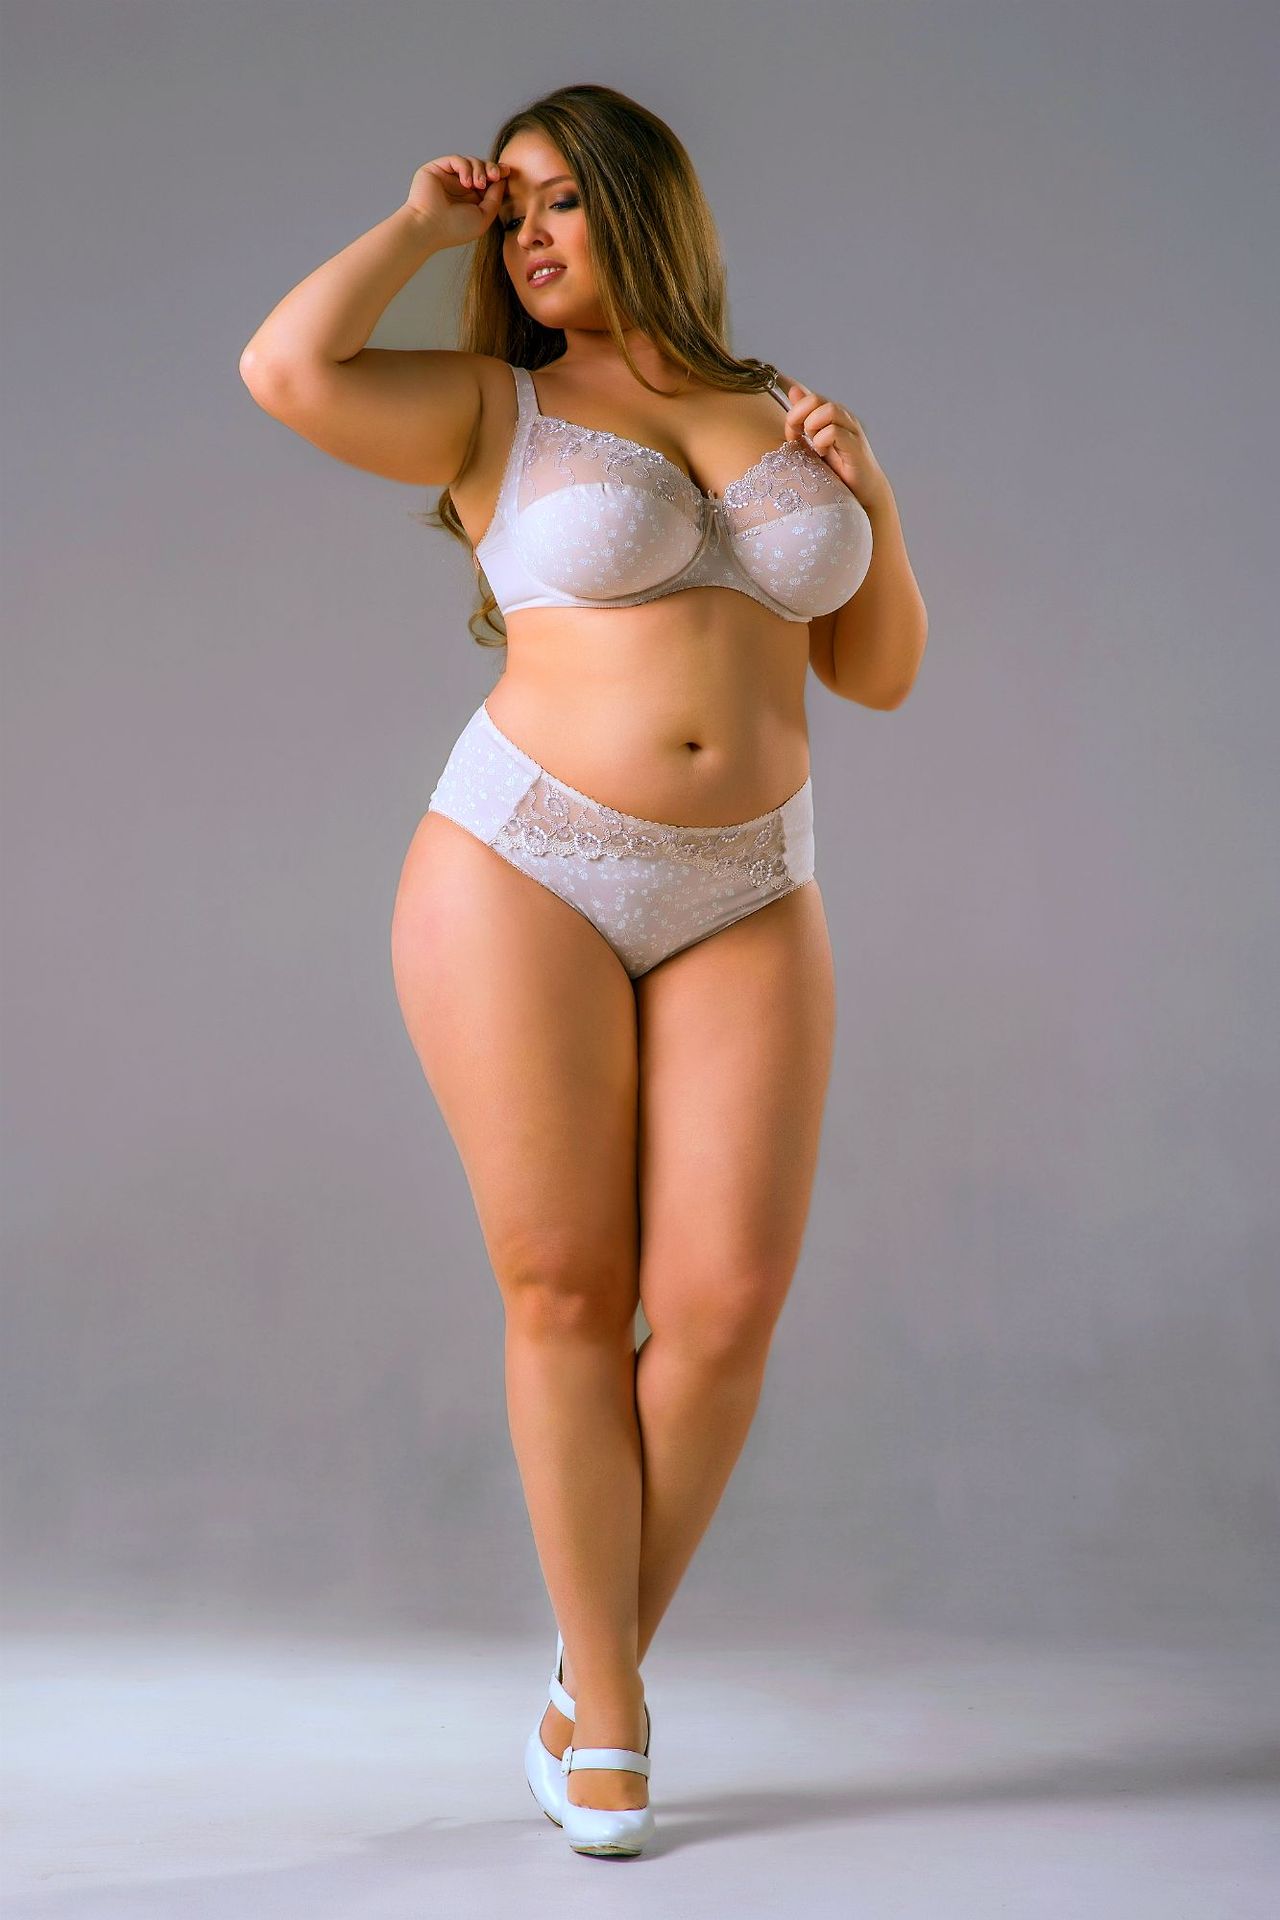 Sexiest chubby women